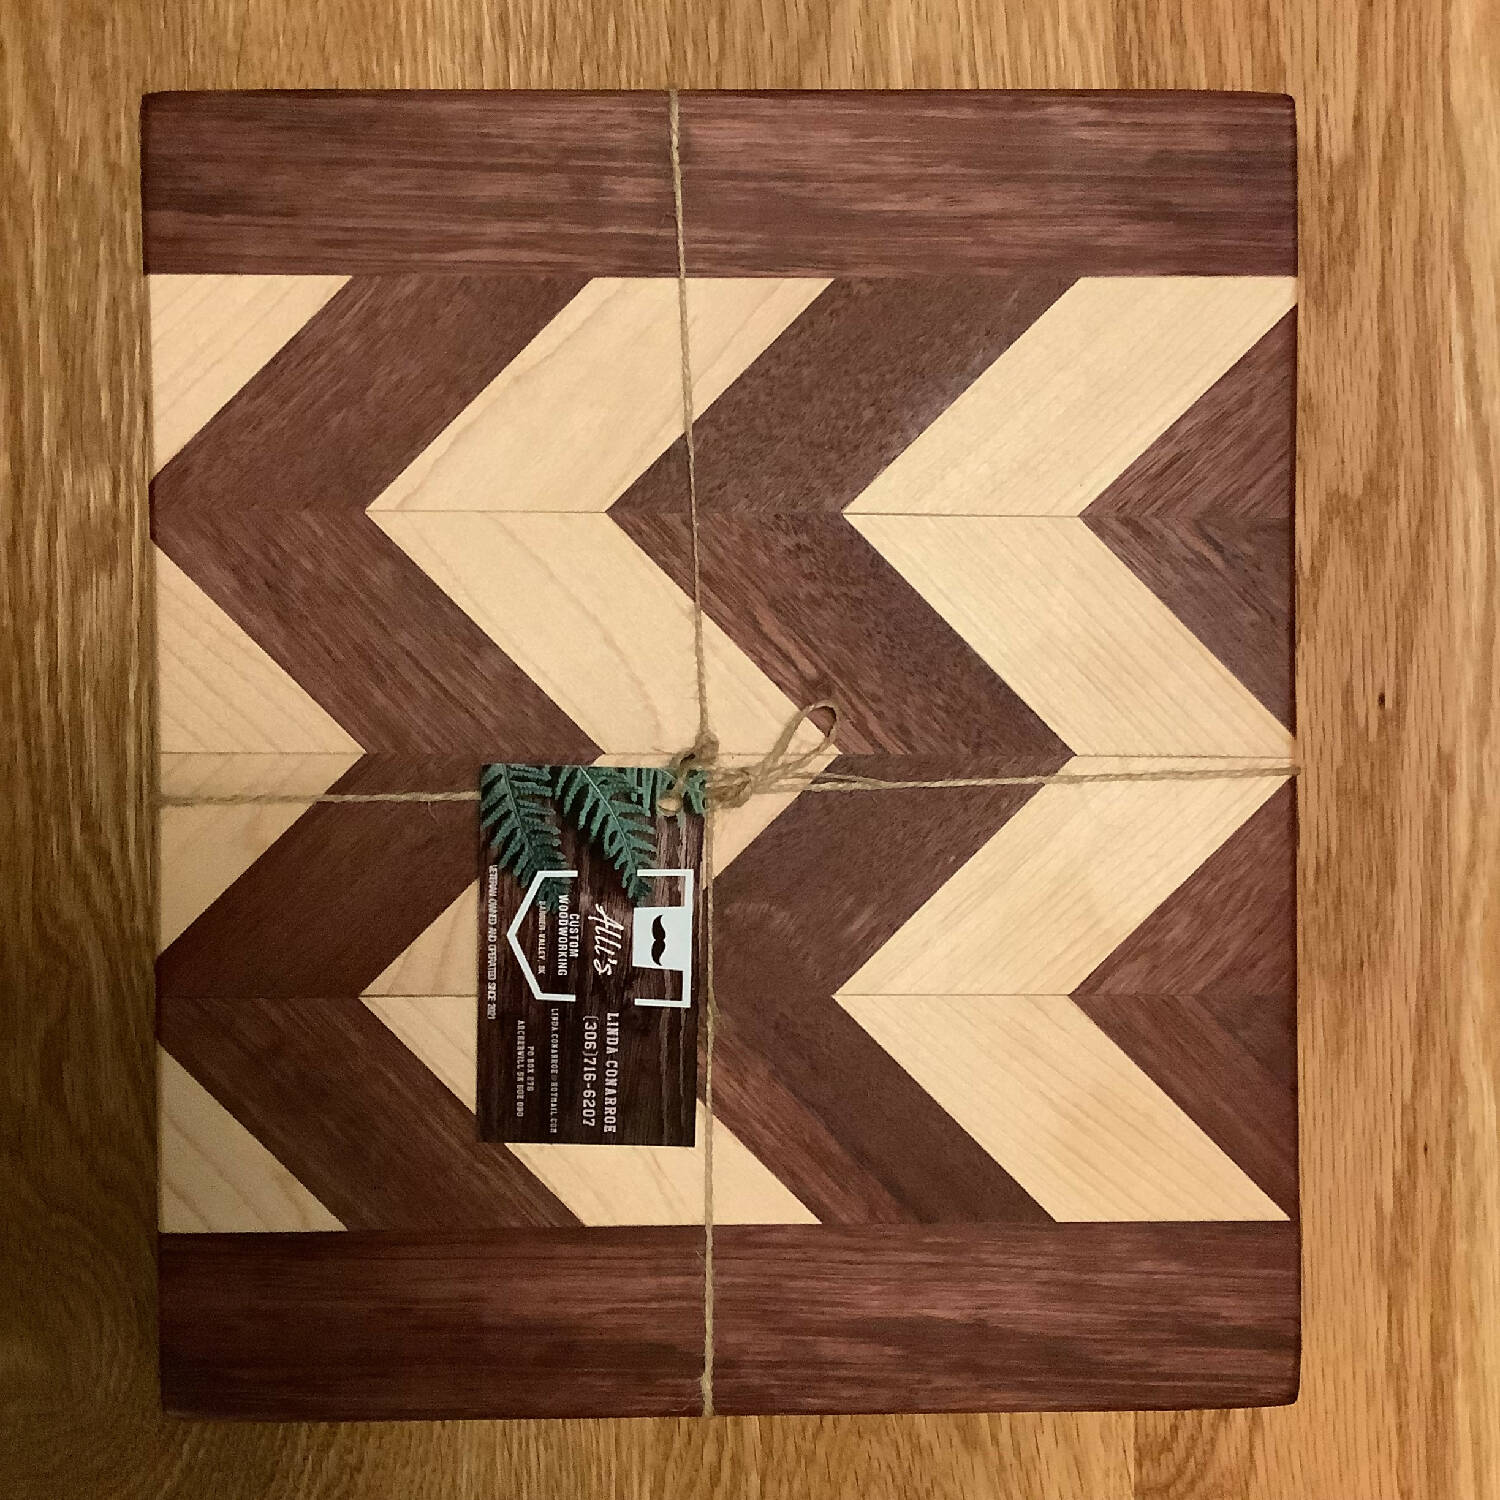 12”x10.5” maple and purple heart chevron pattern cutting board